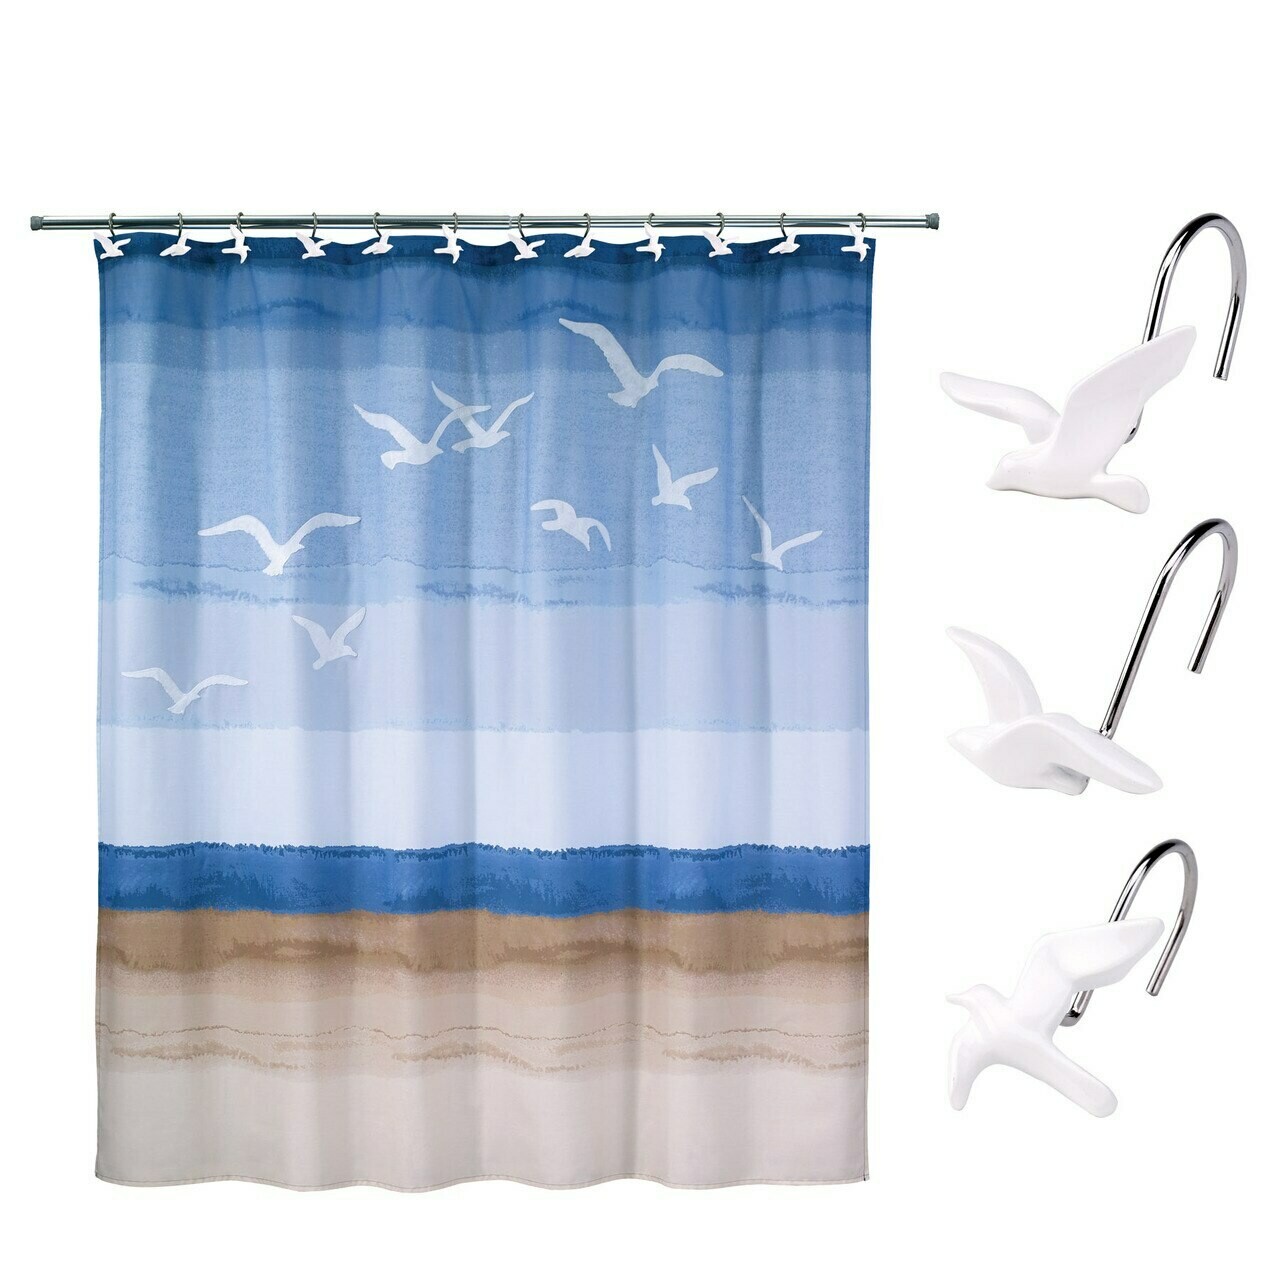 Seagulls Shower Curtain Hooks